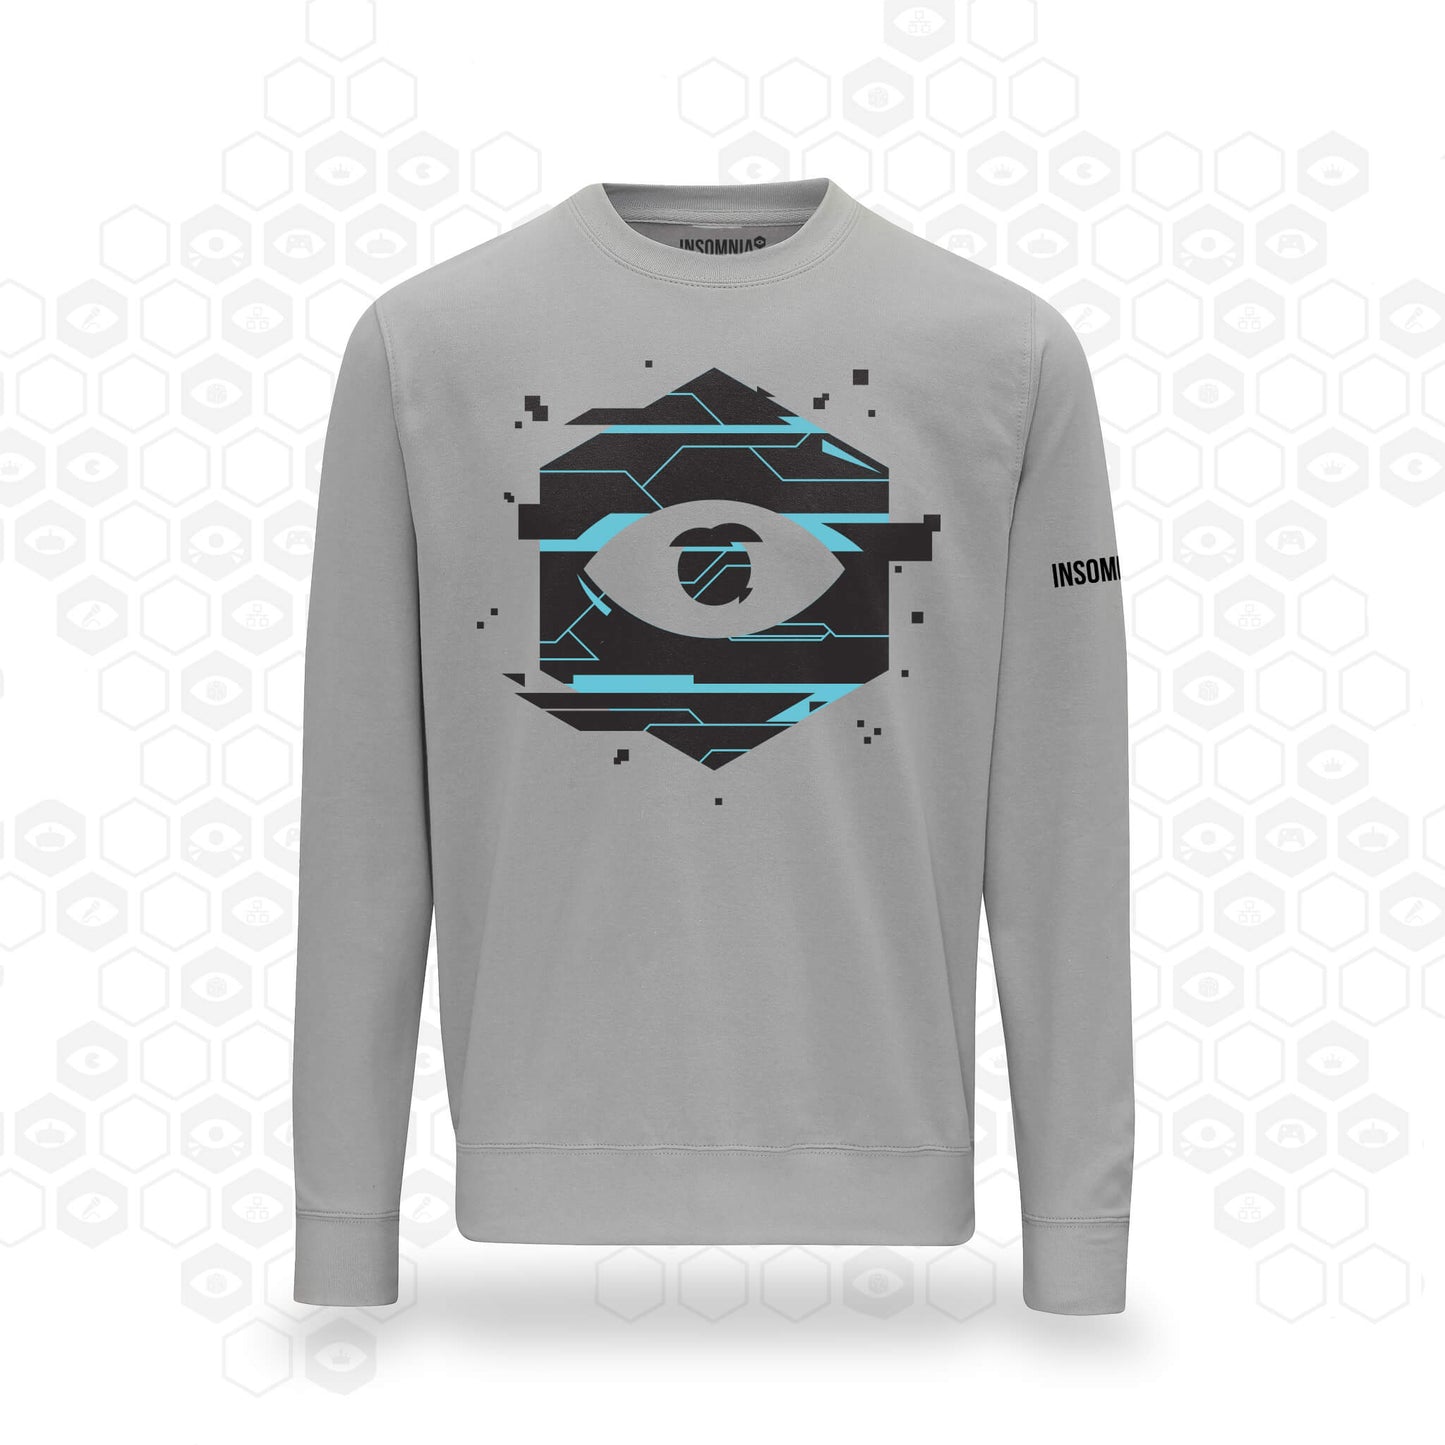 Grey Insomnia sweatshirt freaturing glitching eye design and insomina logo on the sleeve